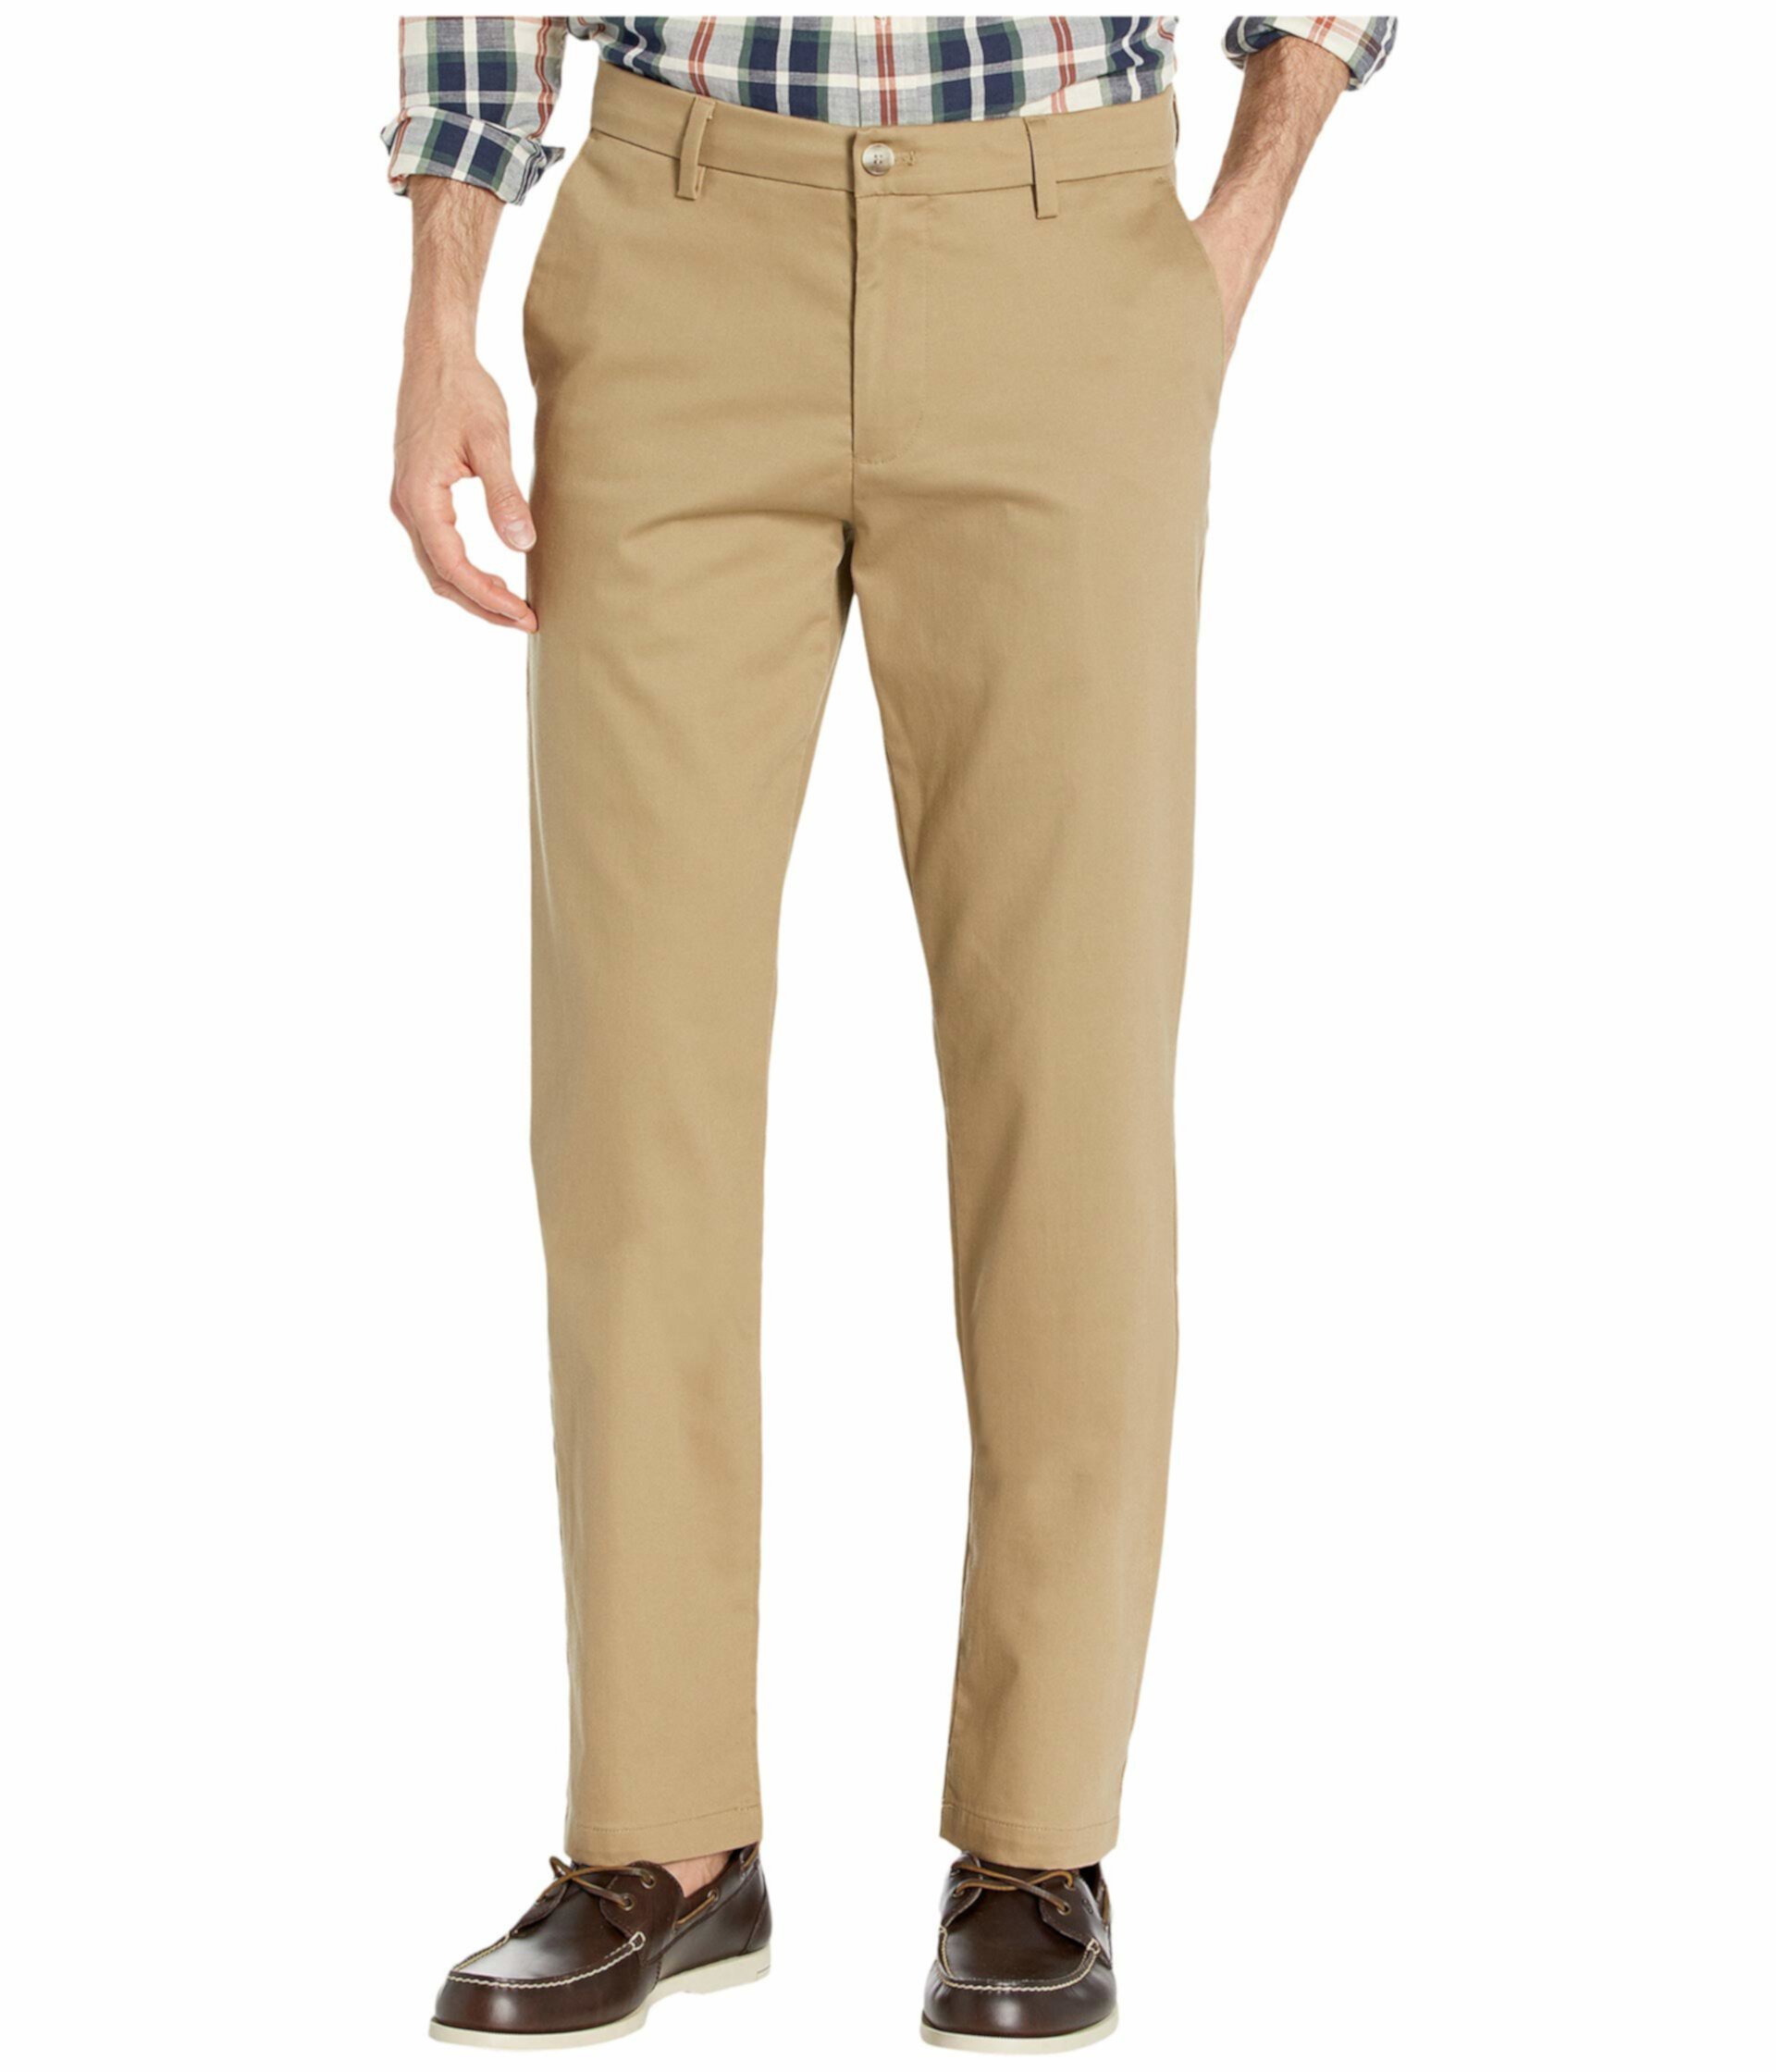 Брюки Dockers для мужчин, модель Slim Tapered Signature Khaki Lux Cotton Stretch Pants - Creaseless, категория - повседневные брюки. Dockers